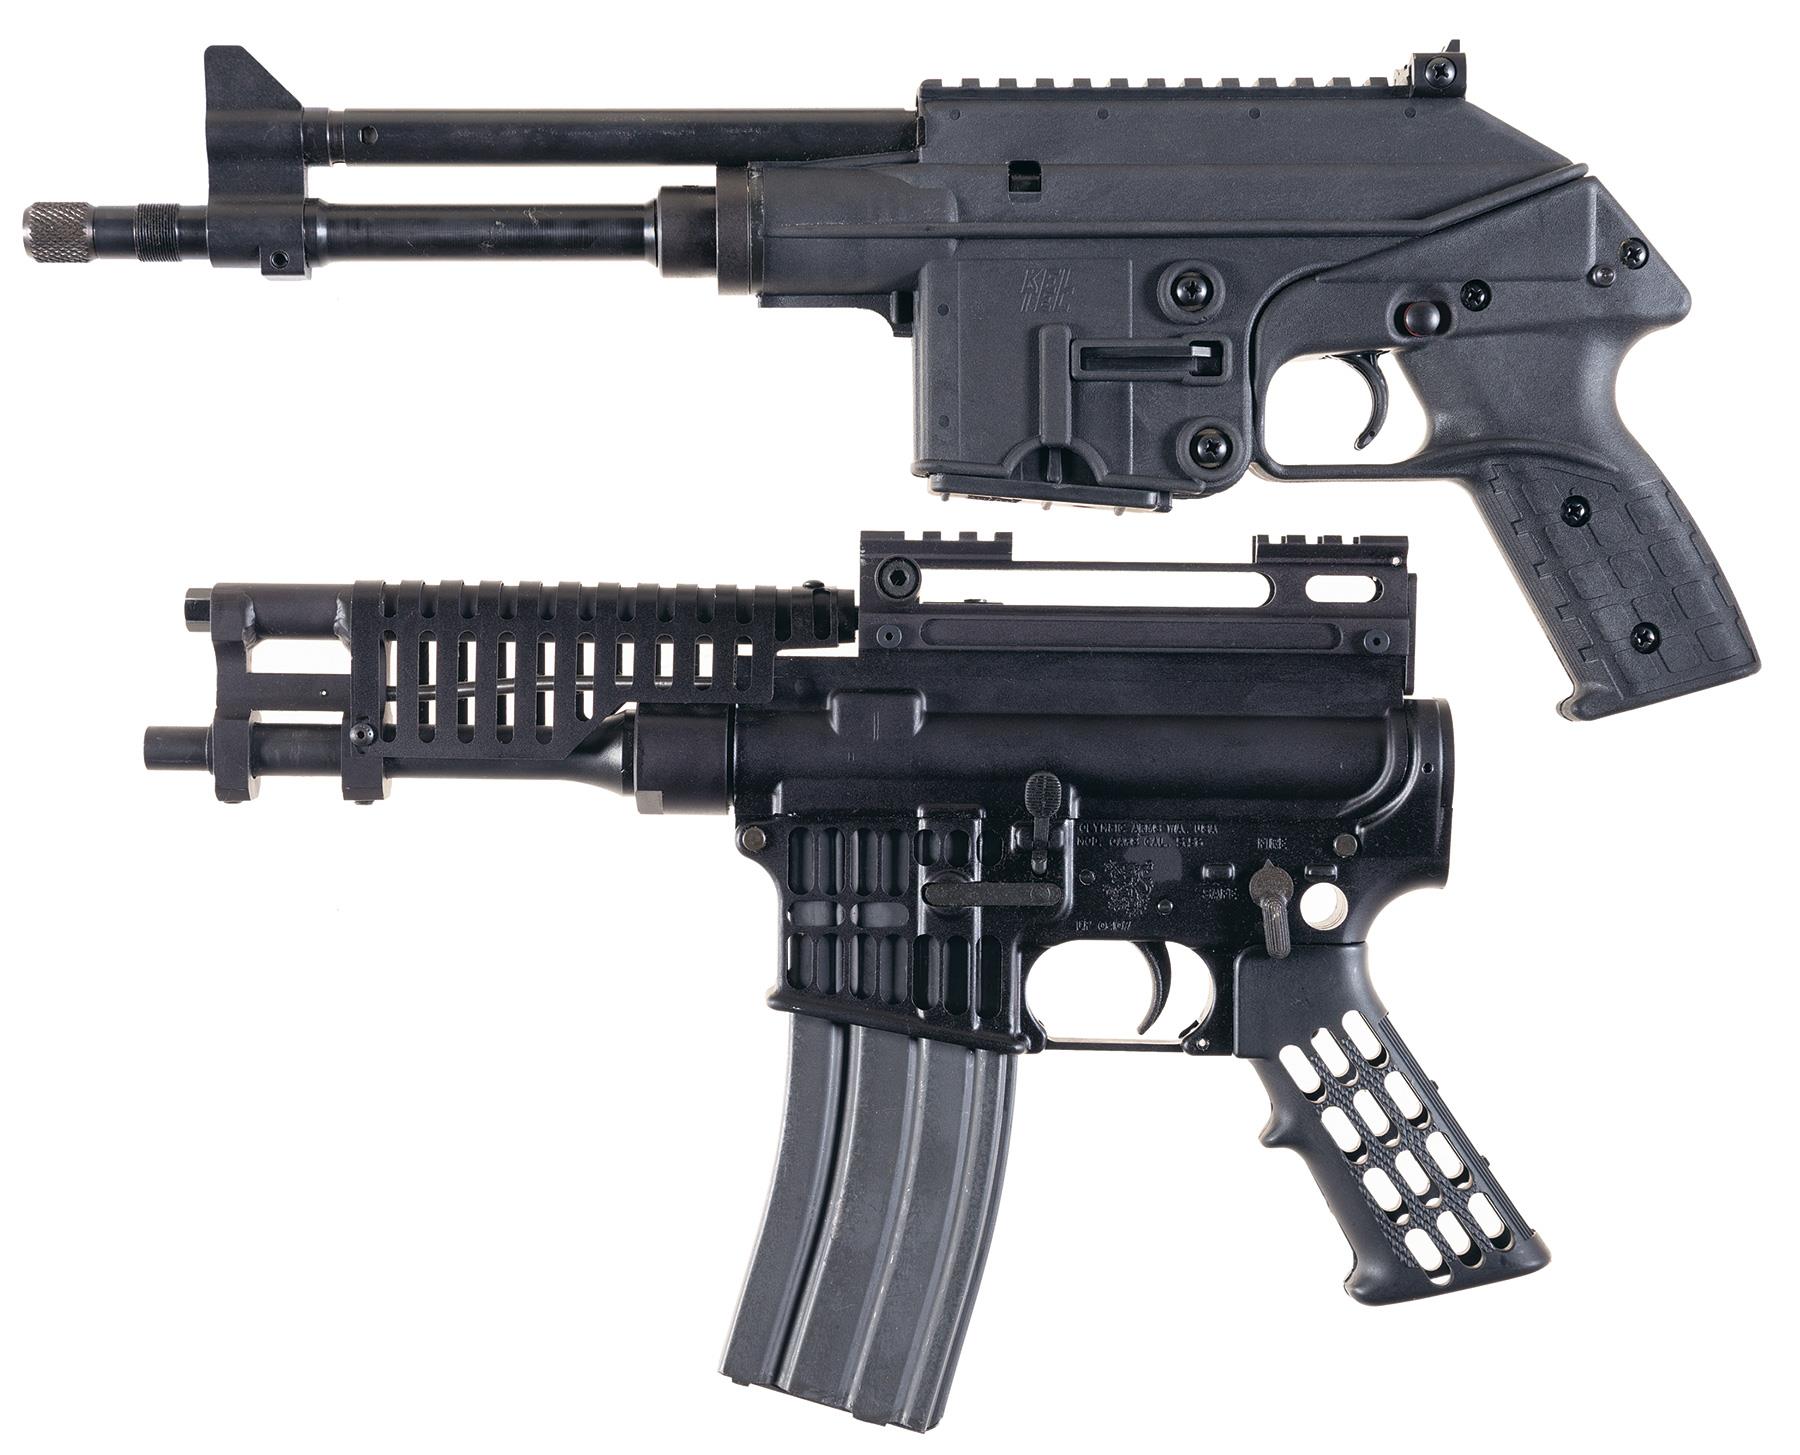 Two 223 Remington Caliber Semi-Automatic Pistols with Beta C-Mag Drum Magaz...